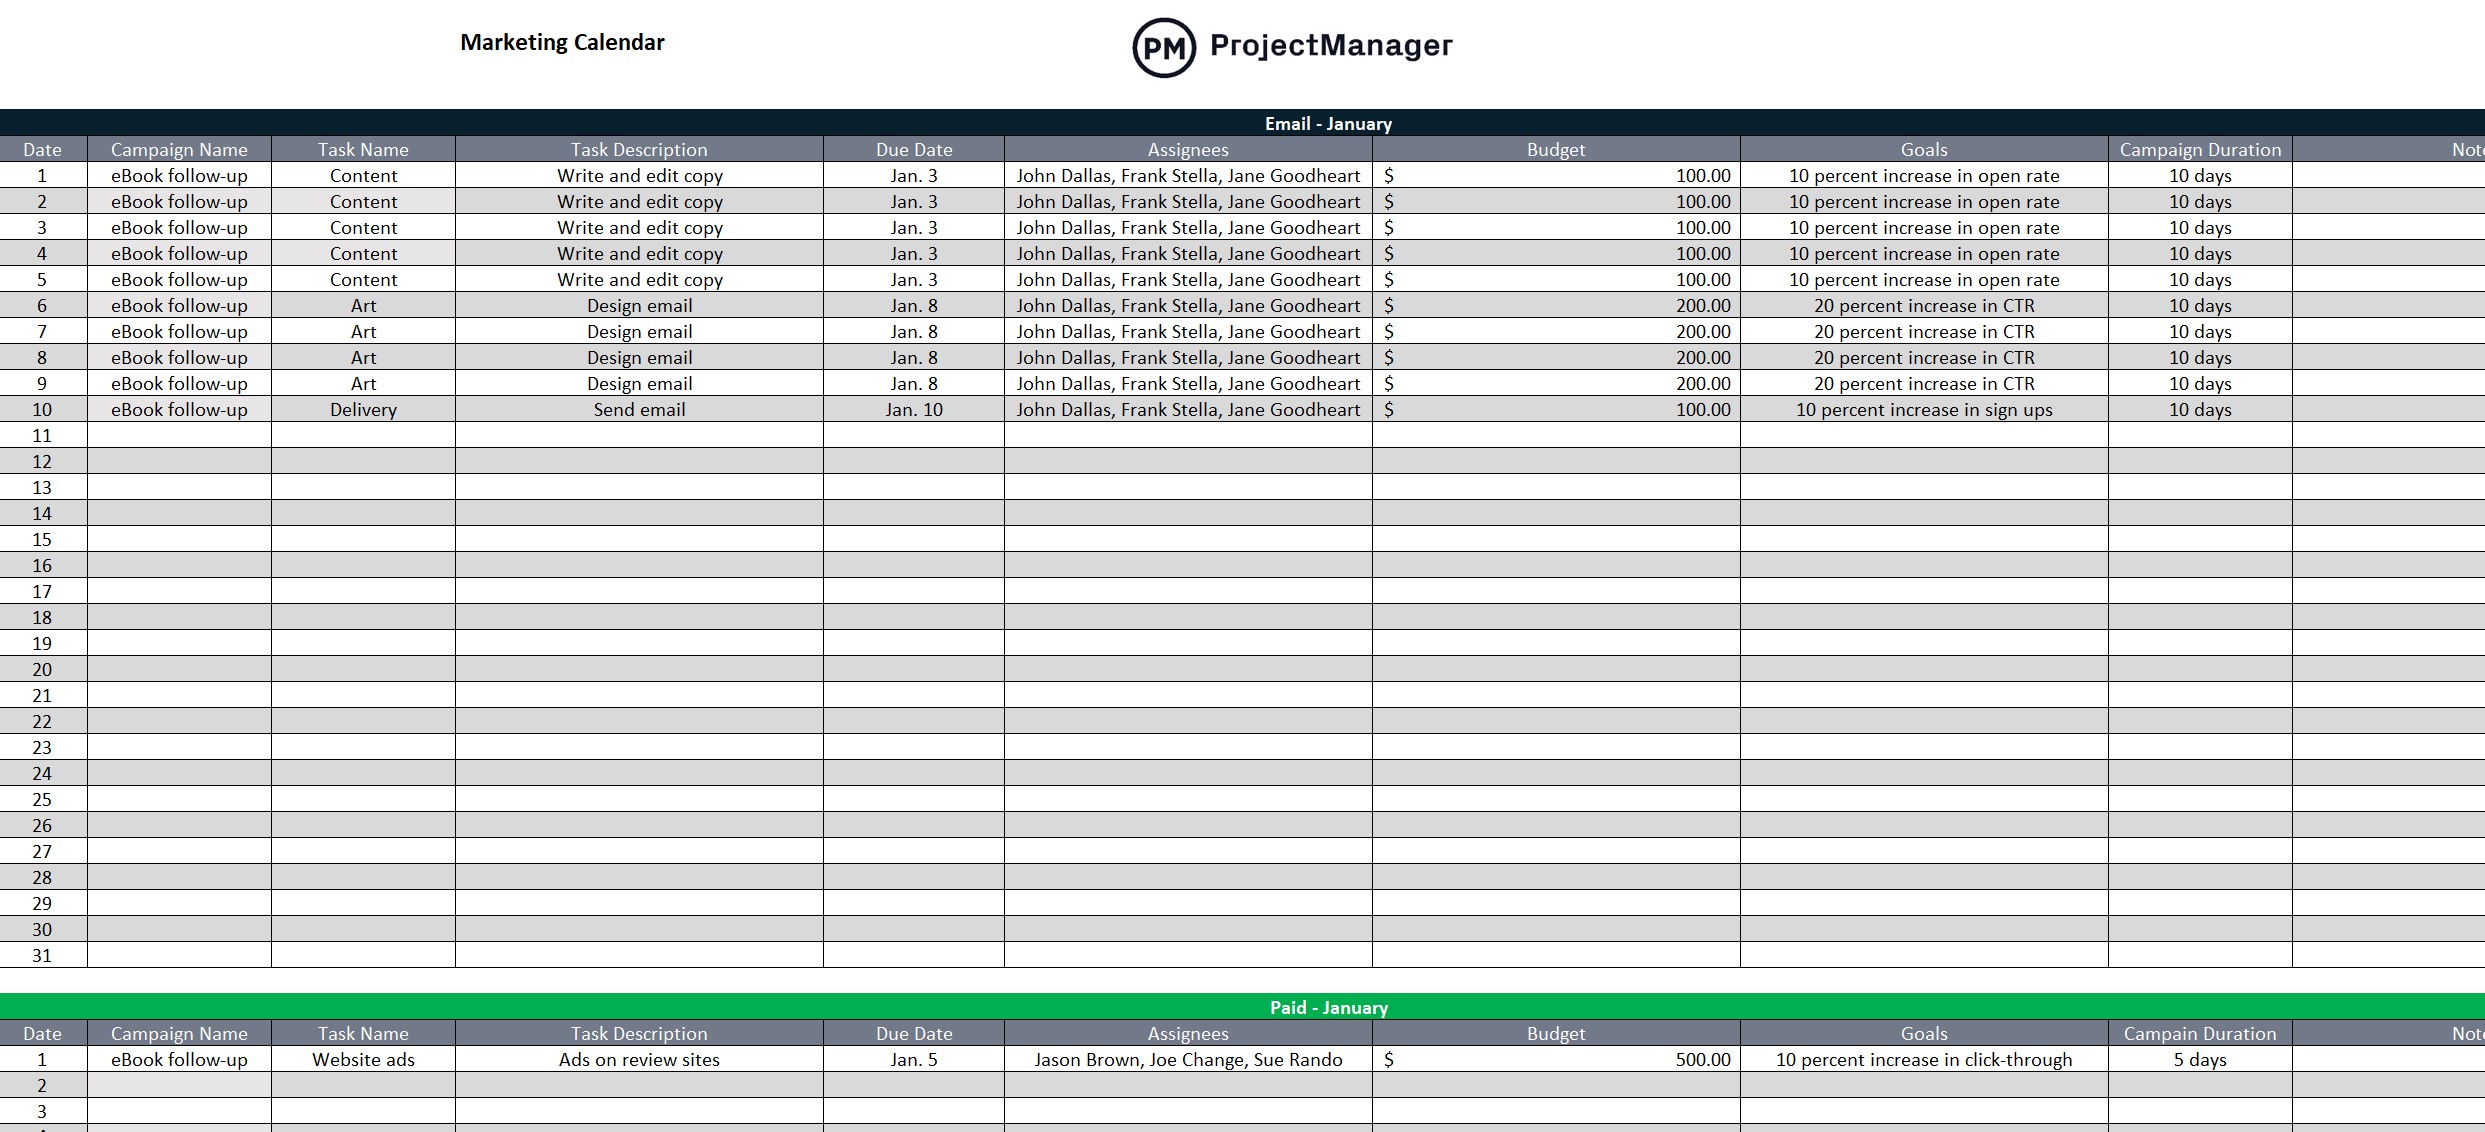 ProjectManager's free marketing calendar template